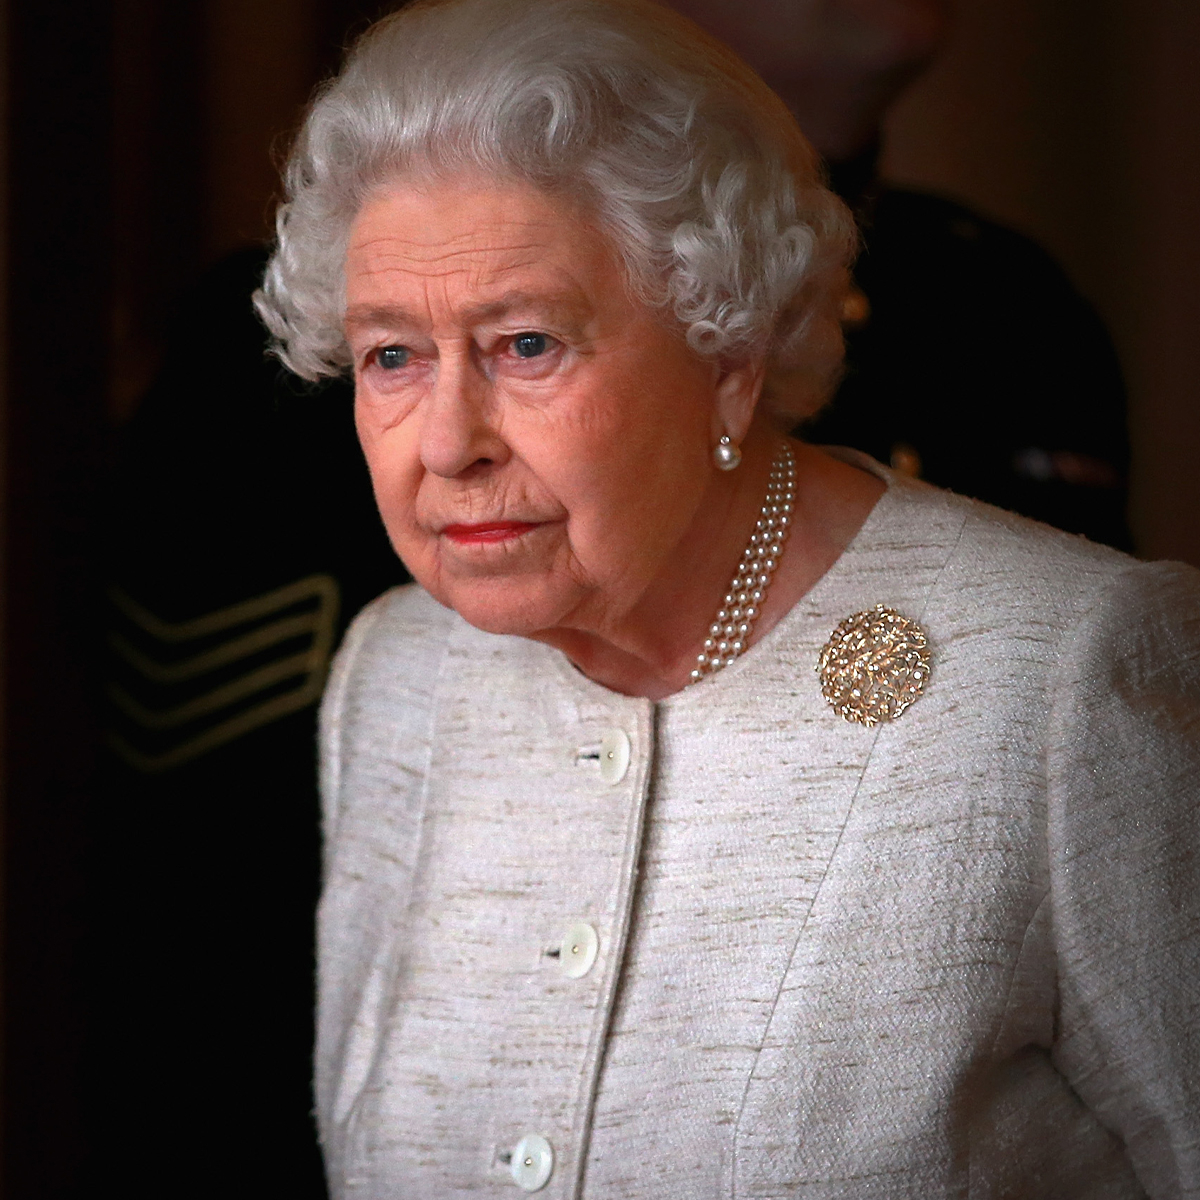 Queen Elizabeth II’s Doctors Are “Concerned” for Her Health